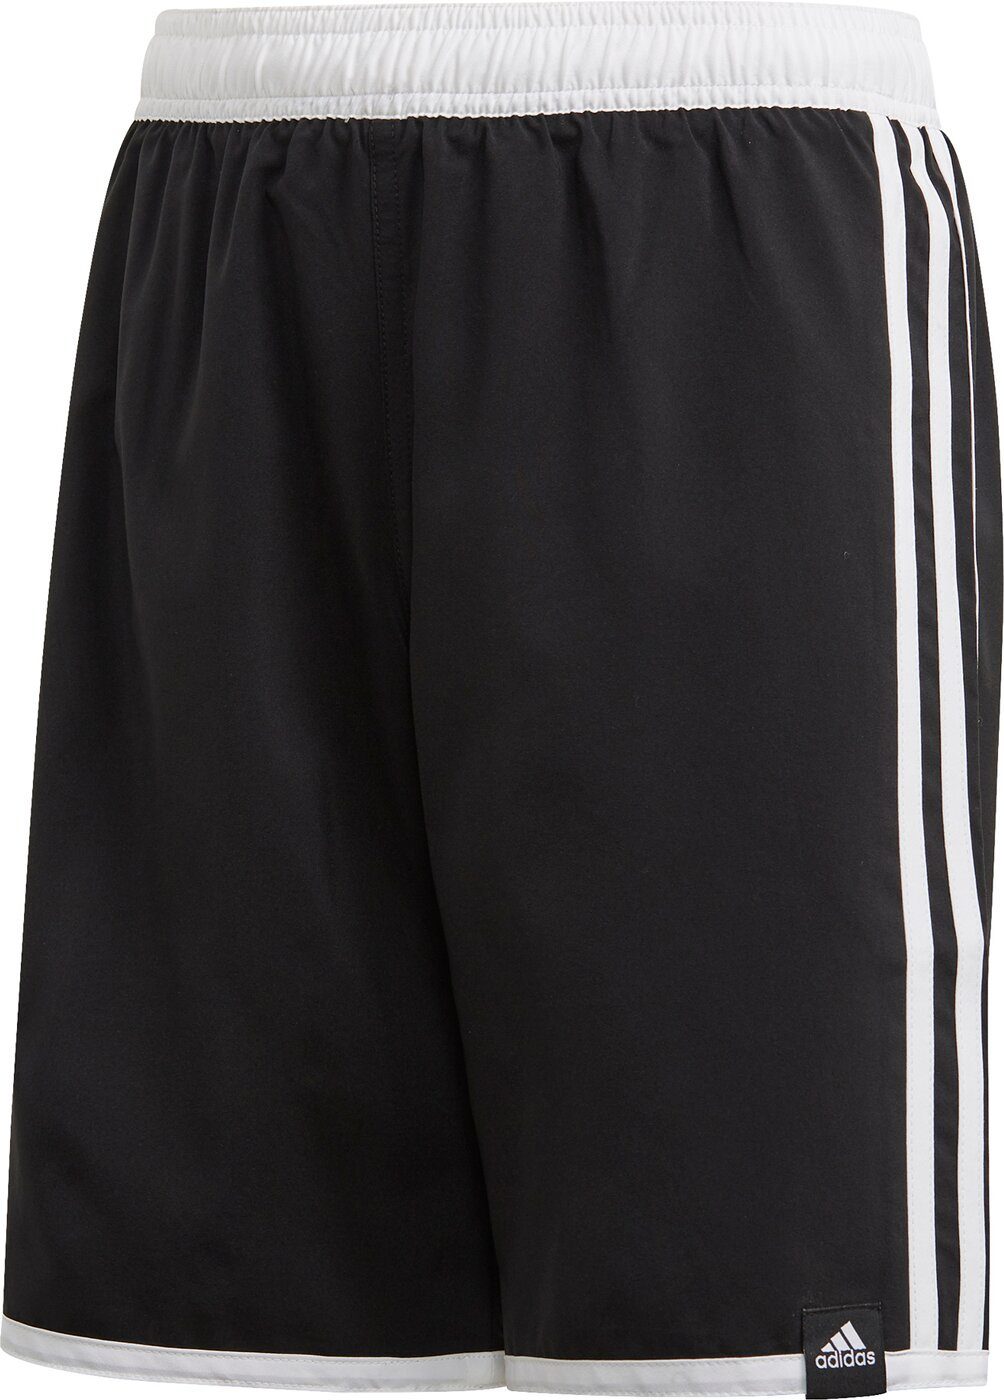 BLACK Sportswear YB adidas SHORTS 3S Badeshorts